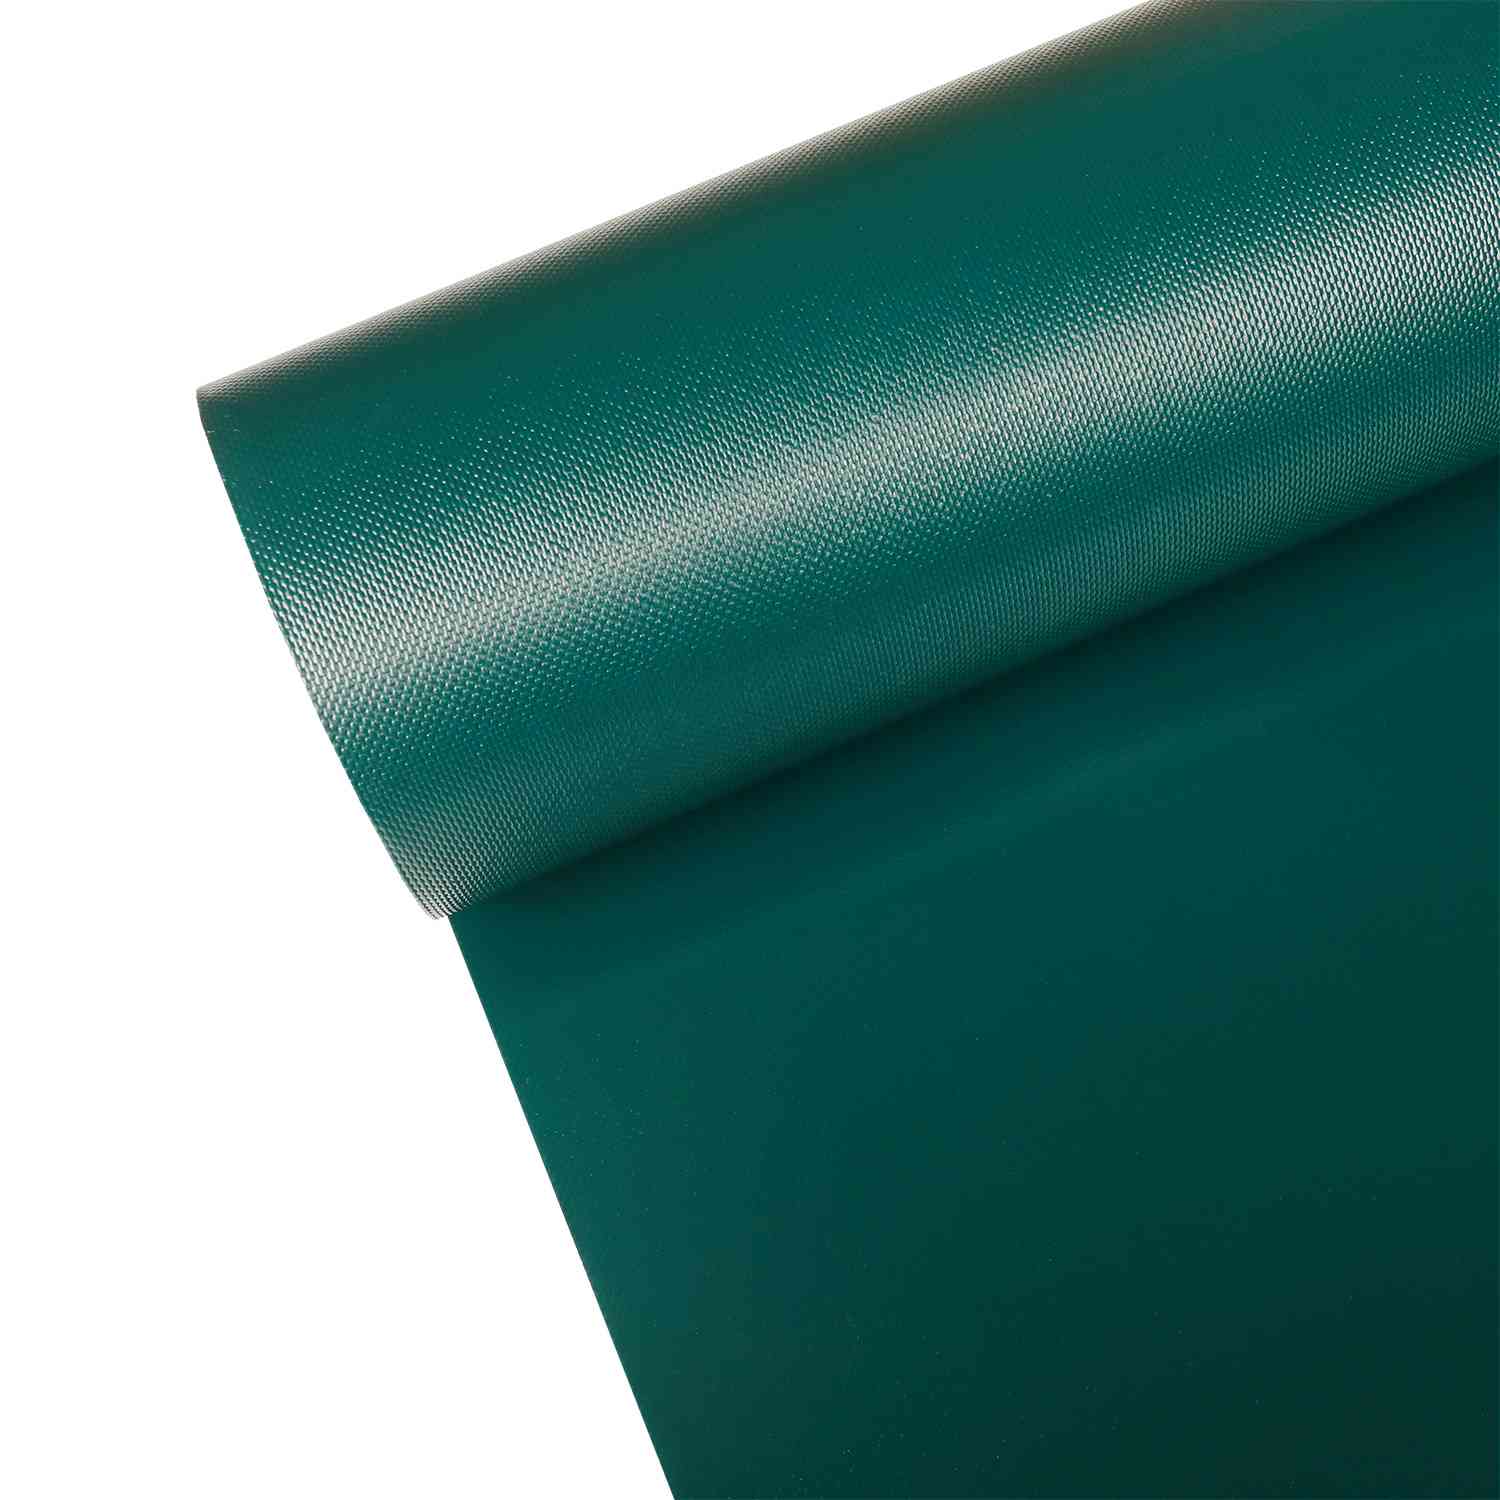 Yatai Textile's Superior 850gsm PVC Coated Airtight Tarpaulin Fabric for Inflatable Boats